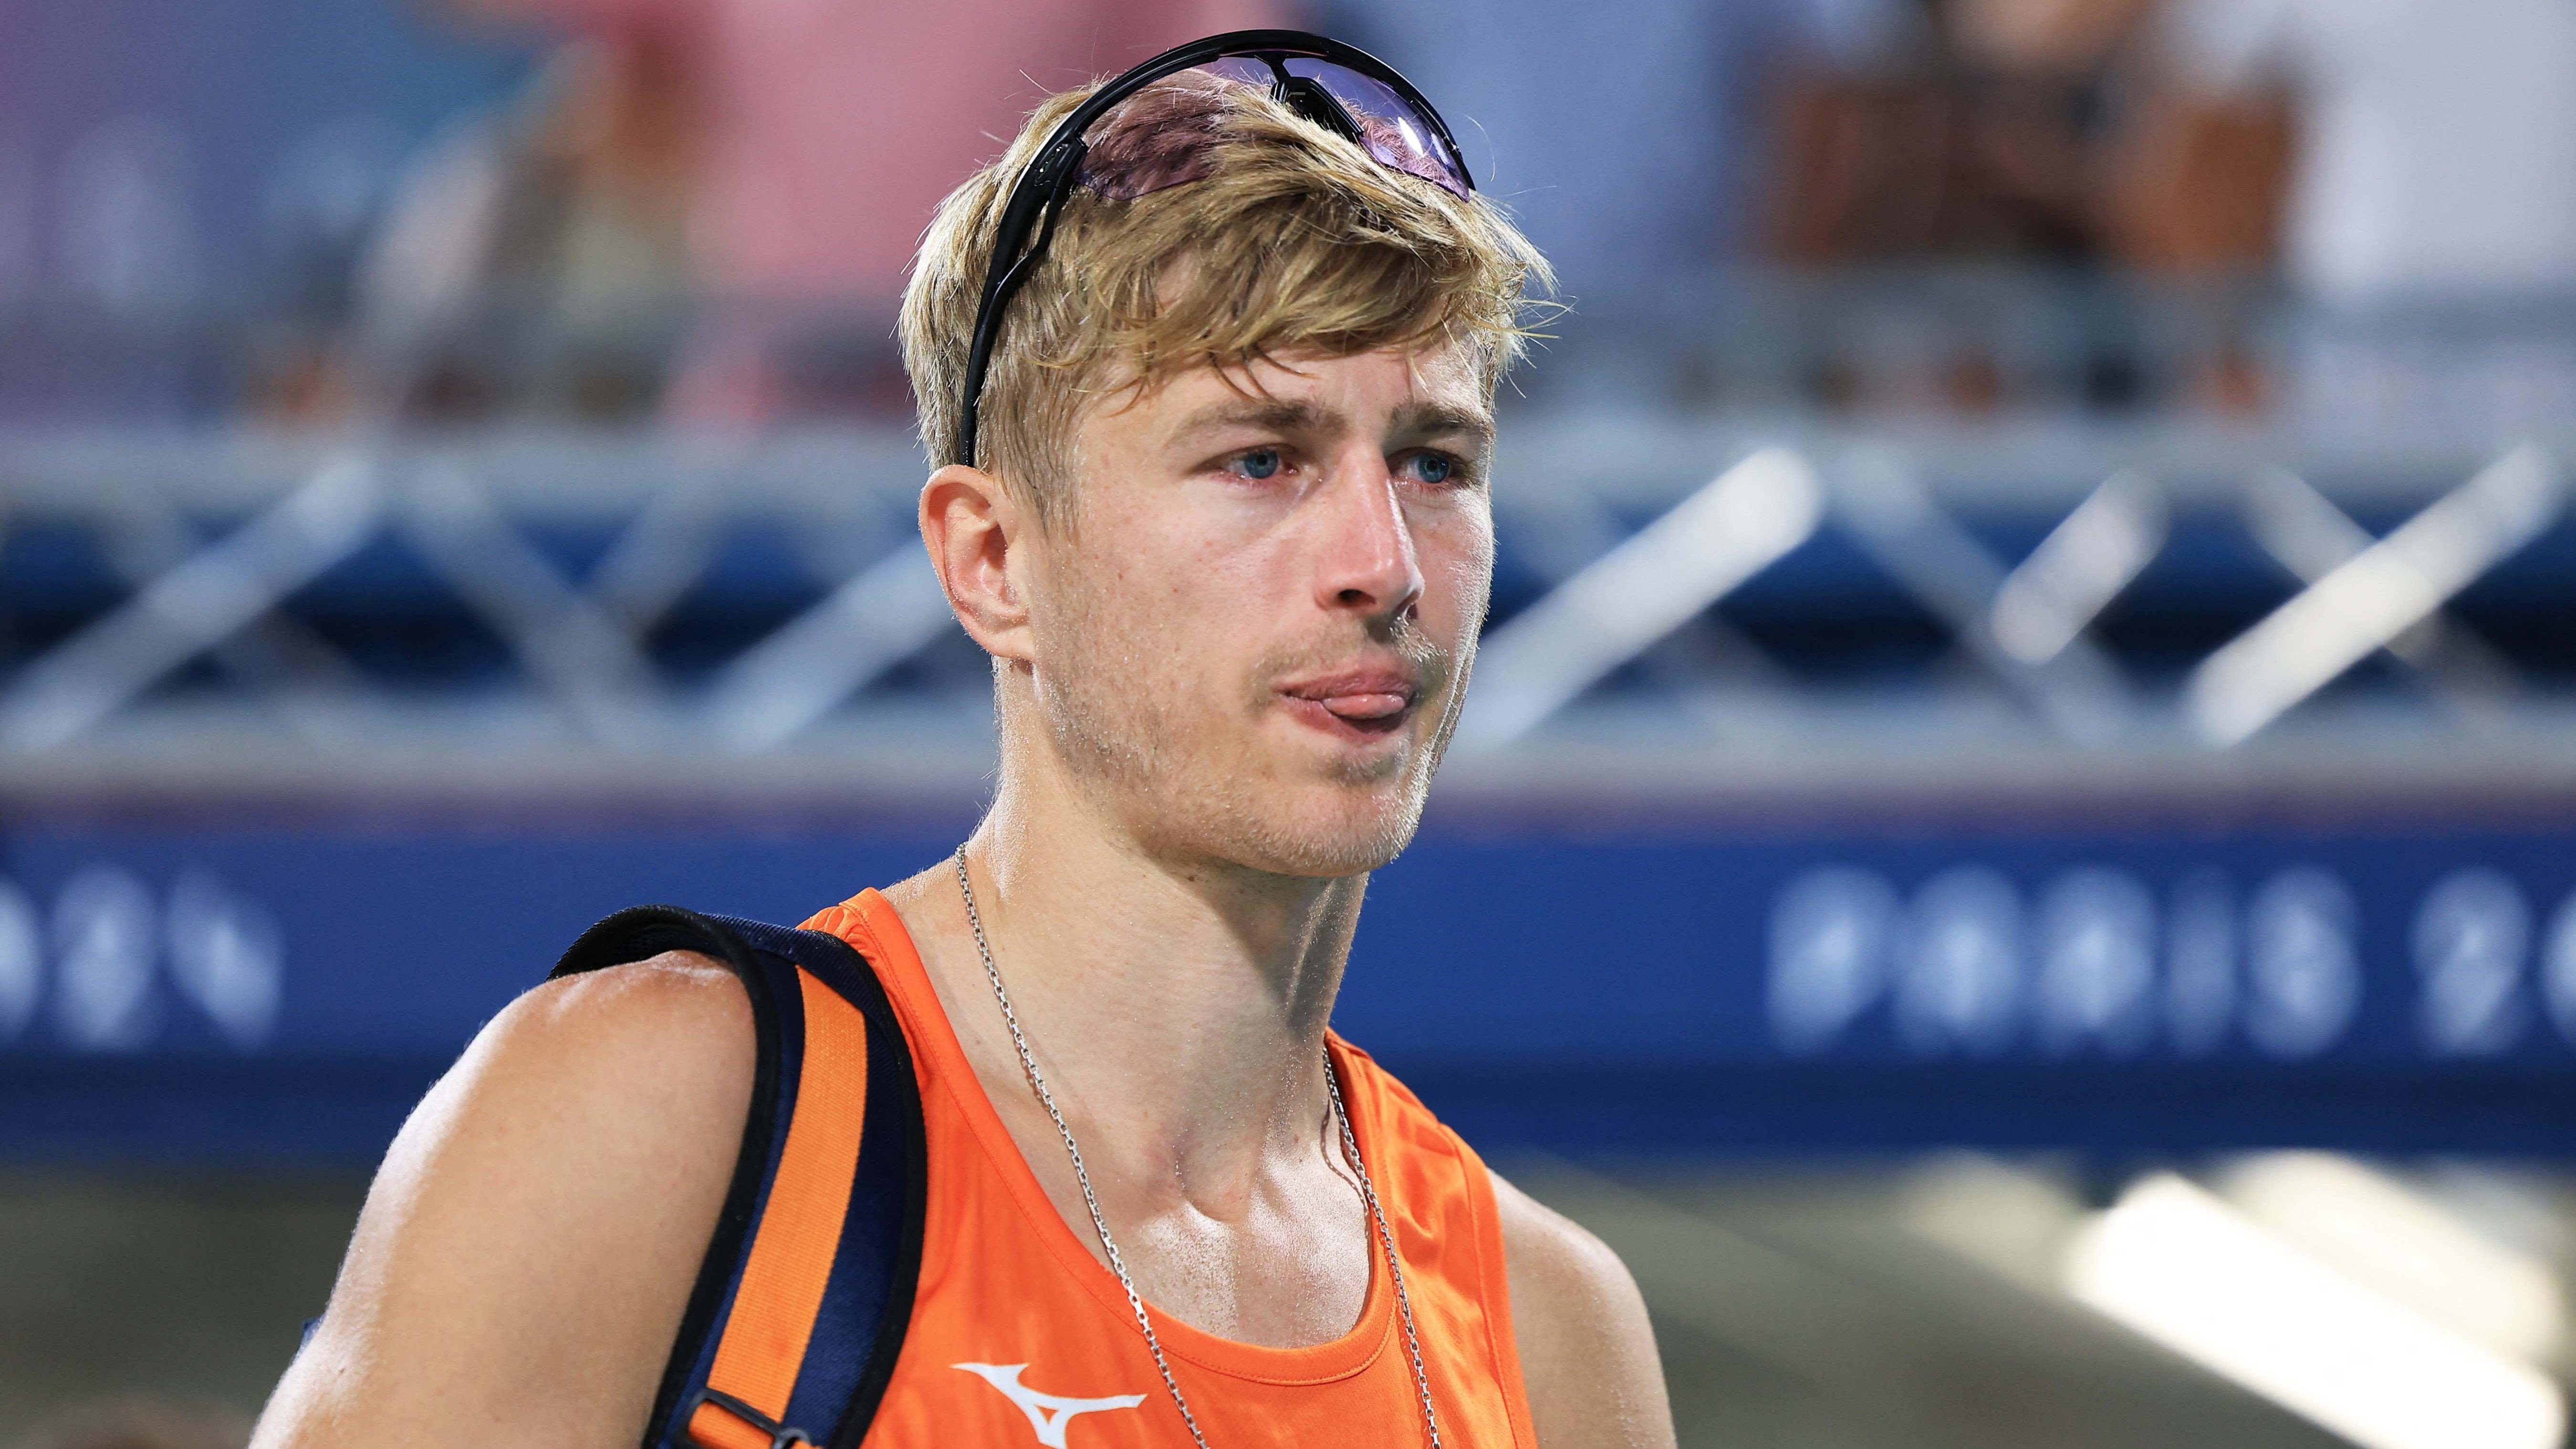 Convicted rapist Van de Velde out of Olympics after loss